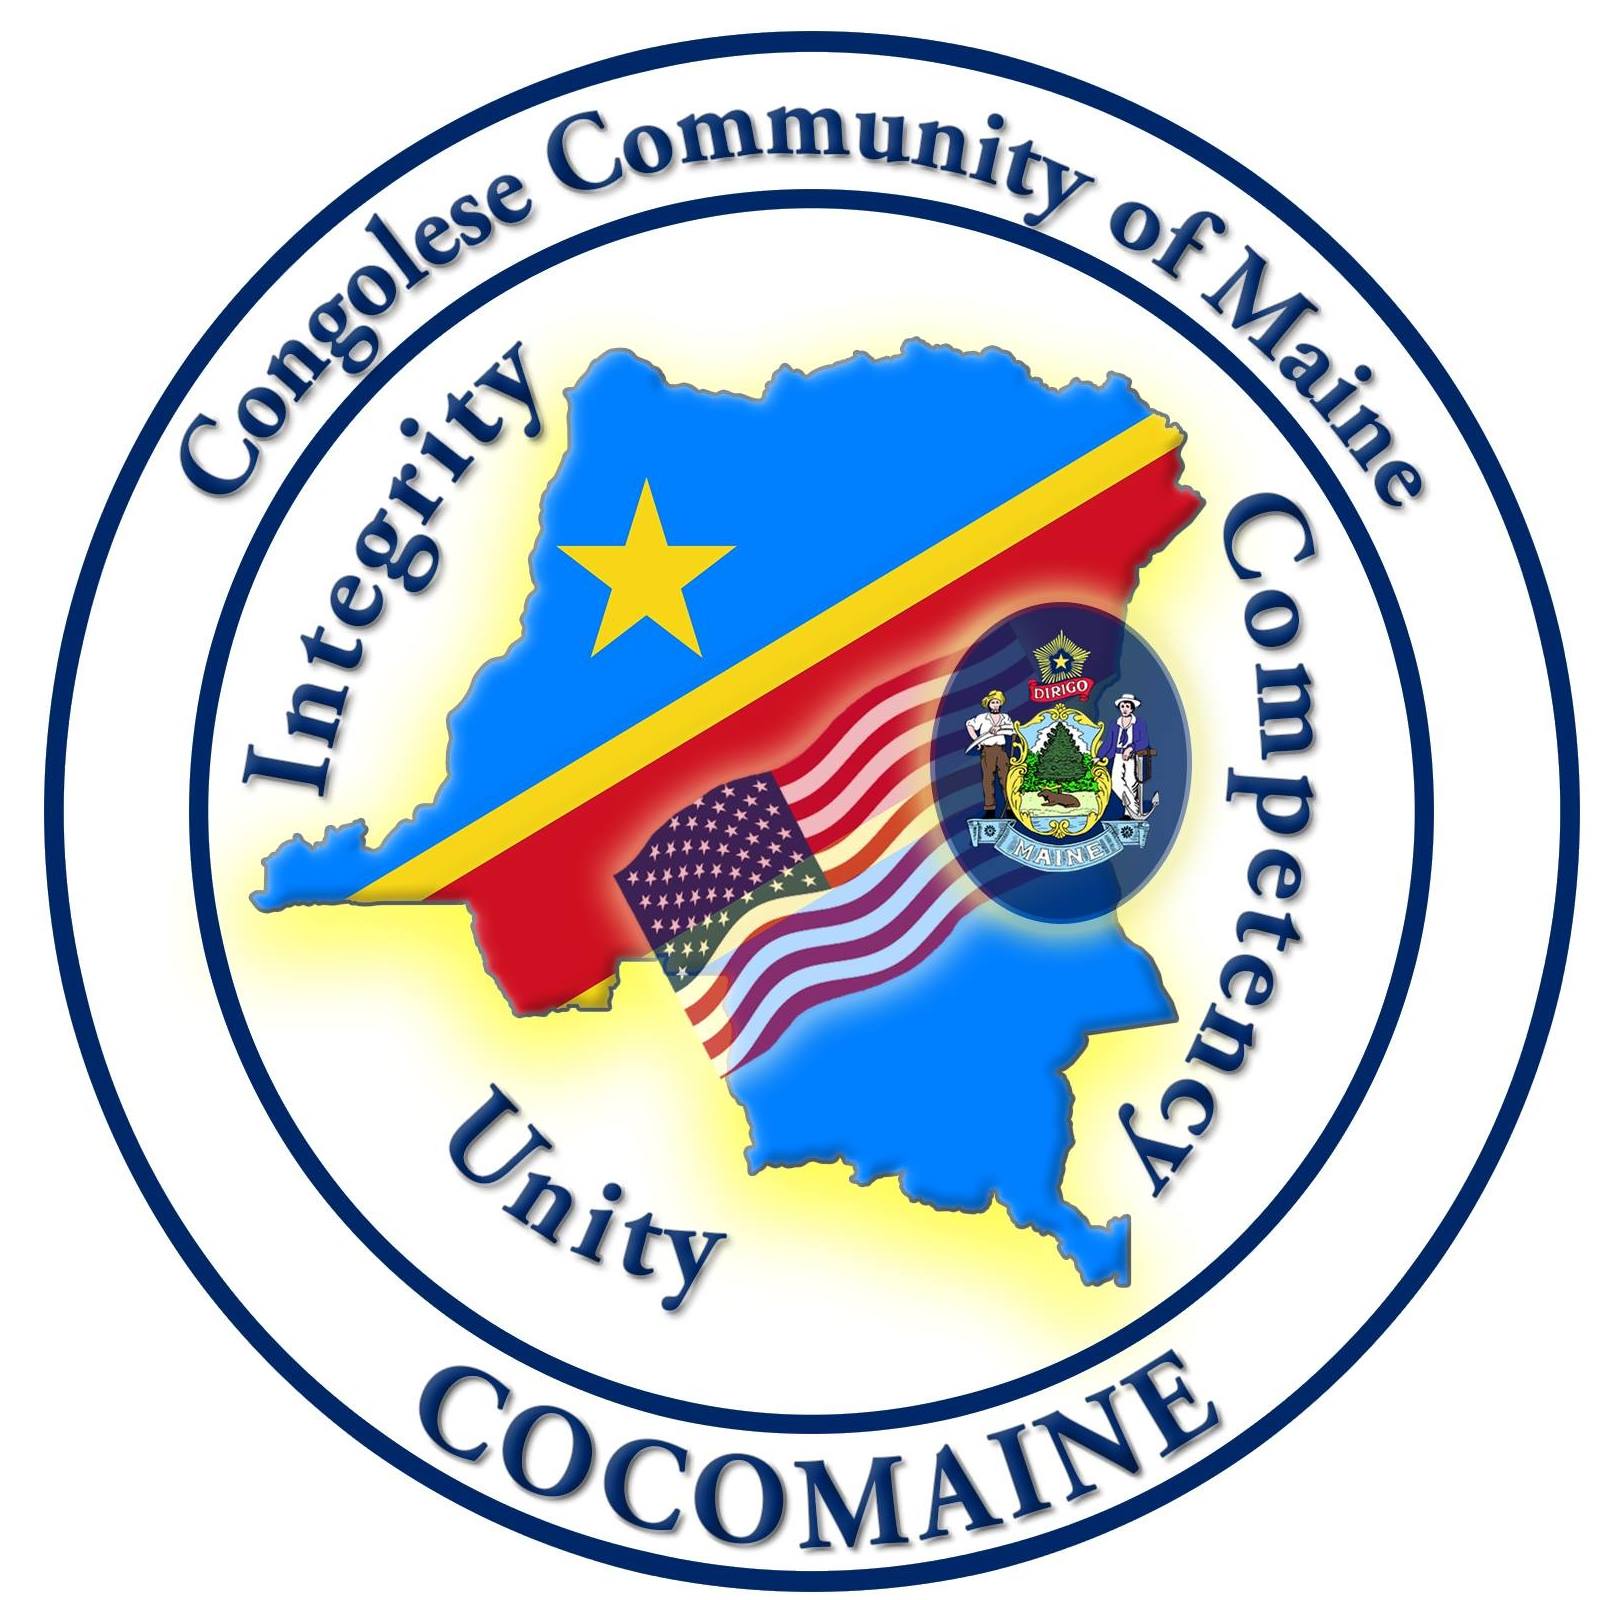 Congolese Community Association of Maine